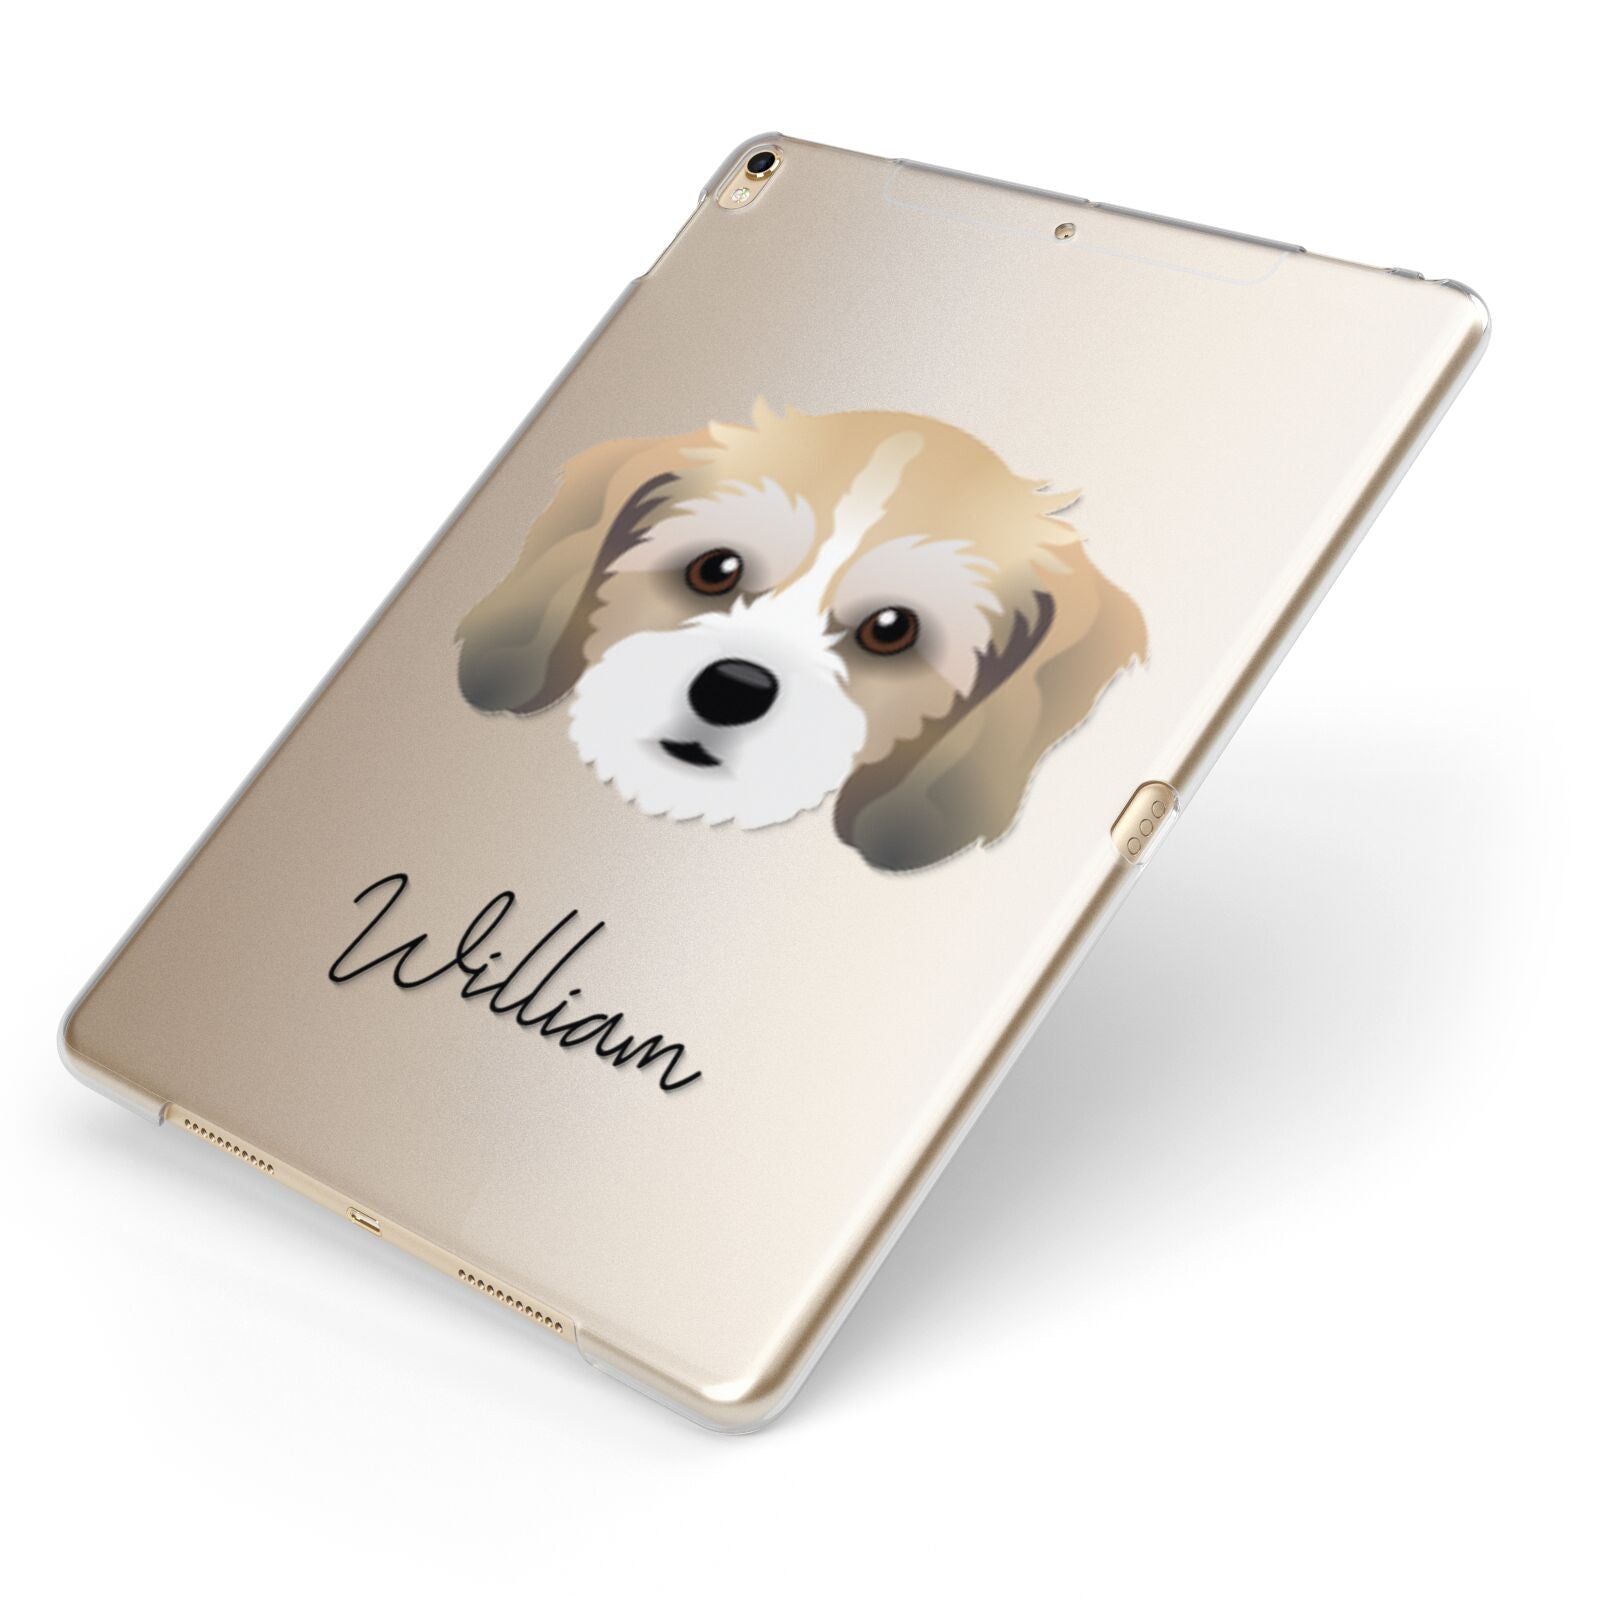 Cavachon Personalised Apple iPad Case on Gold iPad Side View